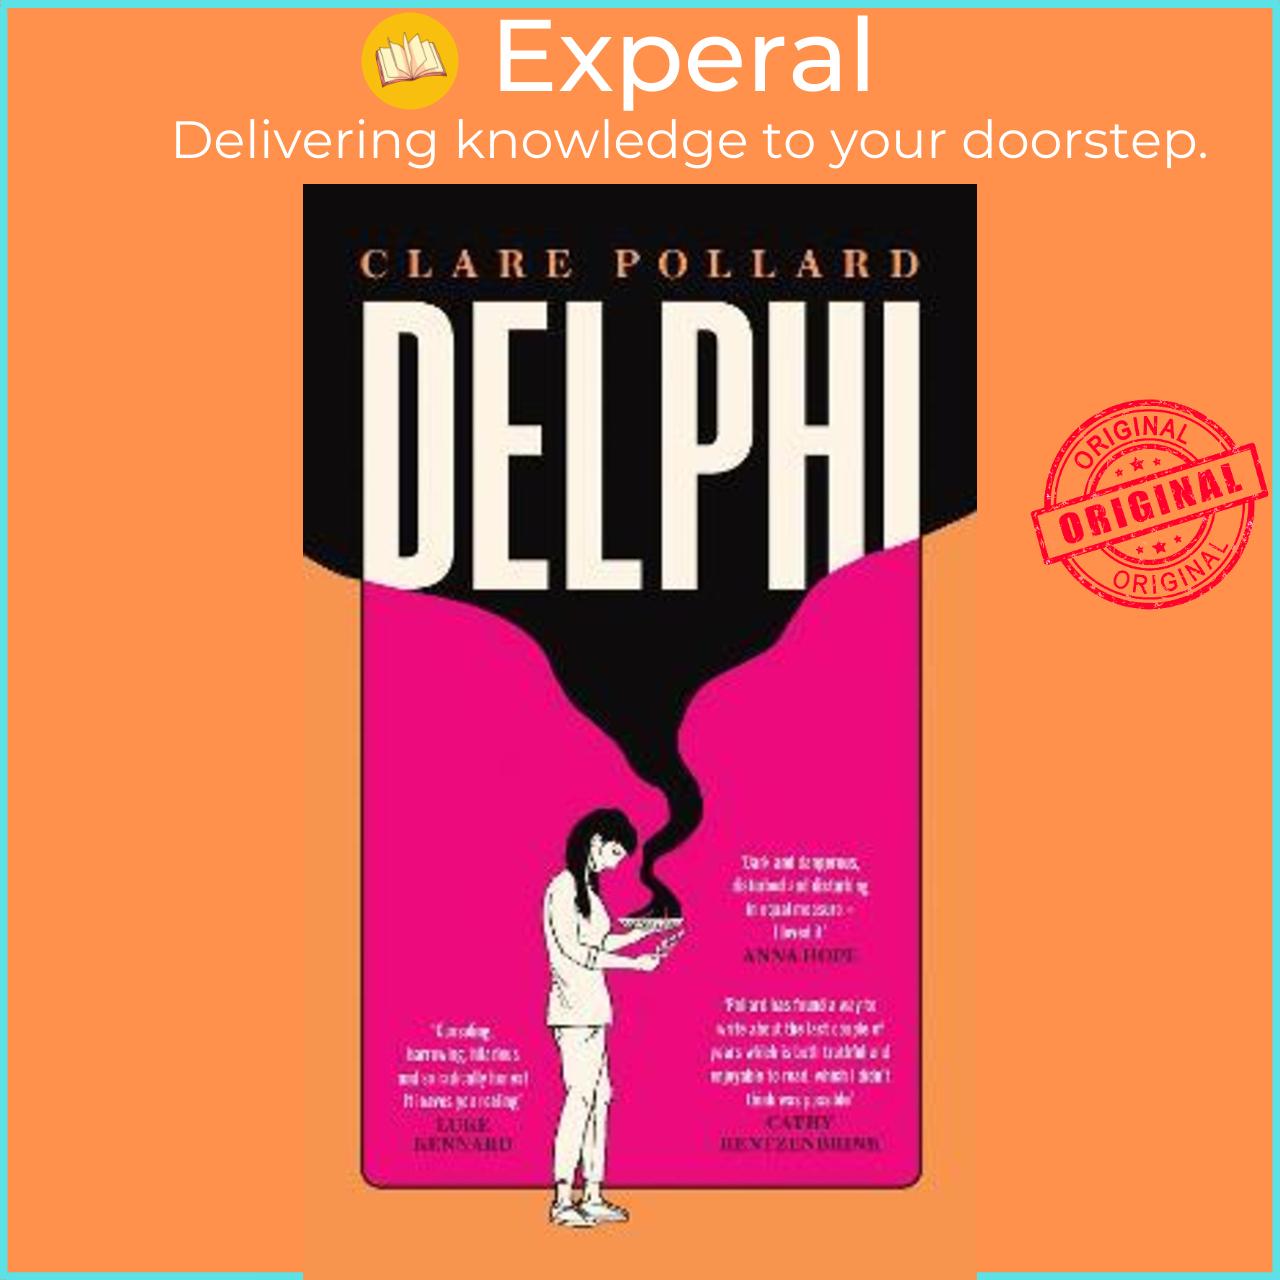 Sách - Delphi by Clare Pollard (UK edition, paperback)